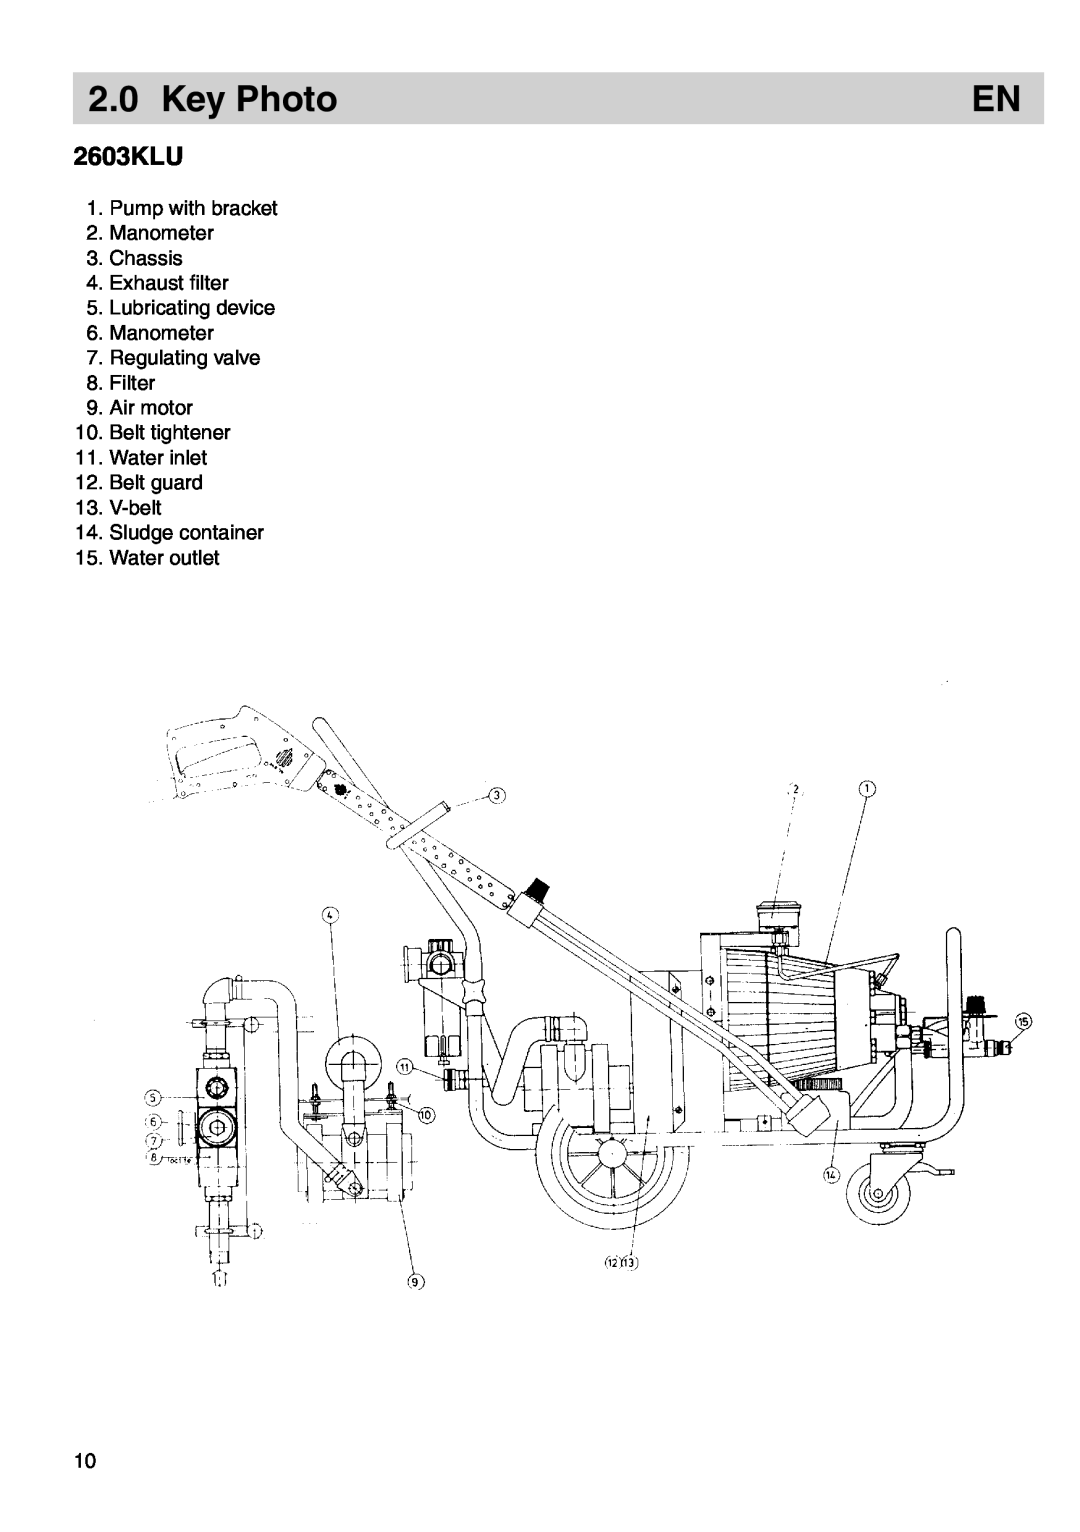 Nilfisk-ALTO user manual Key Photo, 2603KLU, Pump with bracket 2. Manometer 3. Chassis 4. Exhaust ﬁ lter 